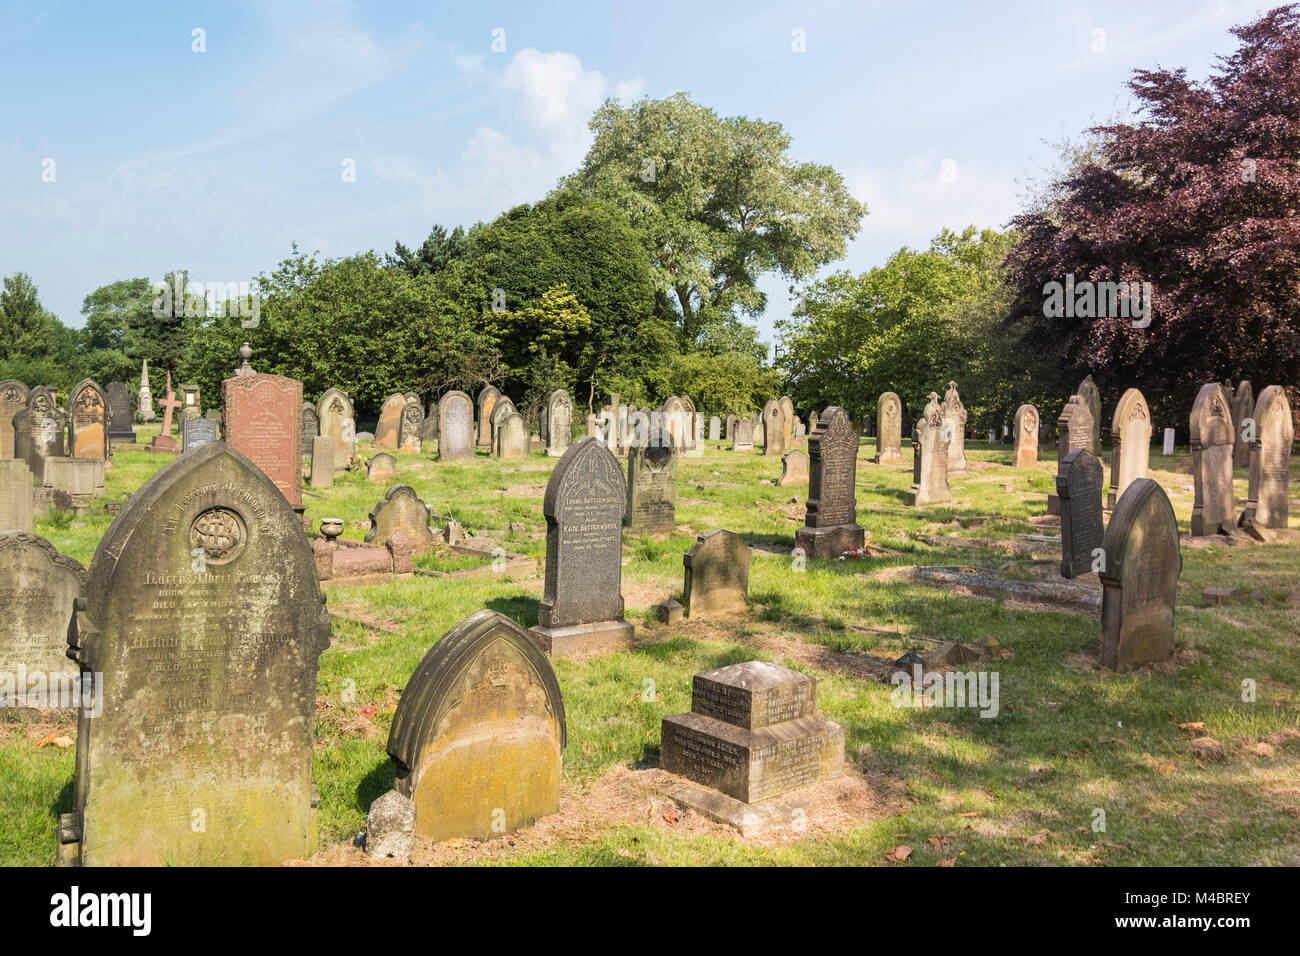 Warstone Lane Cemetery, The Jewellery Quarter of Birmingham, England Stock Photo